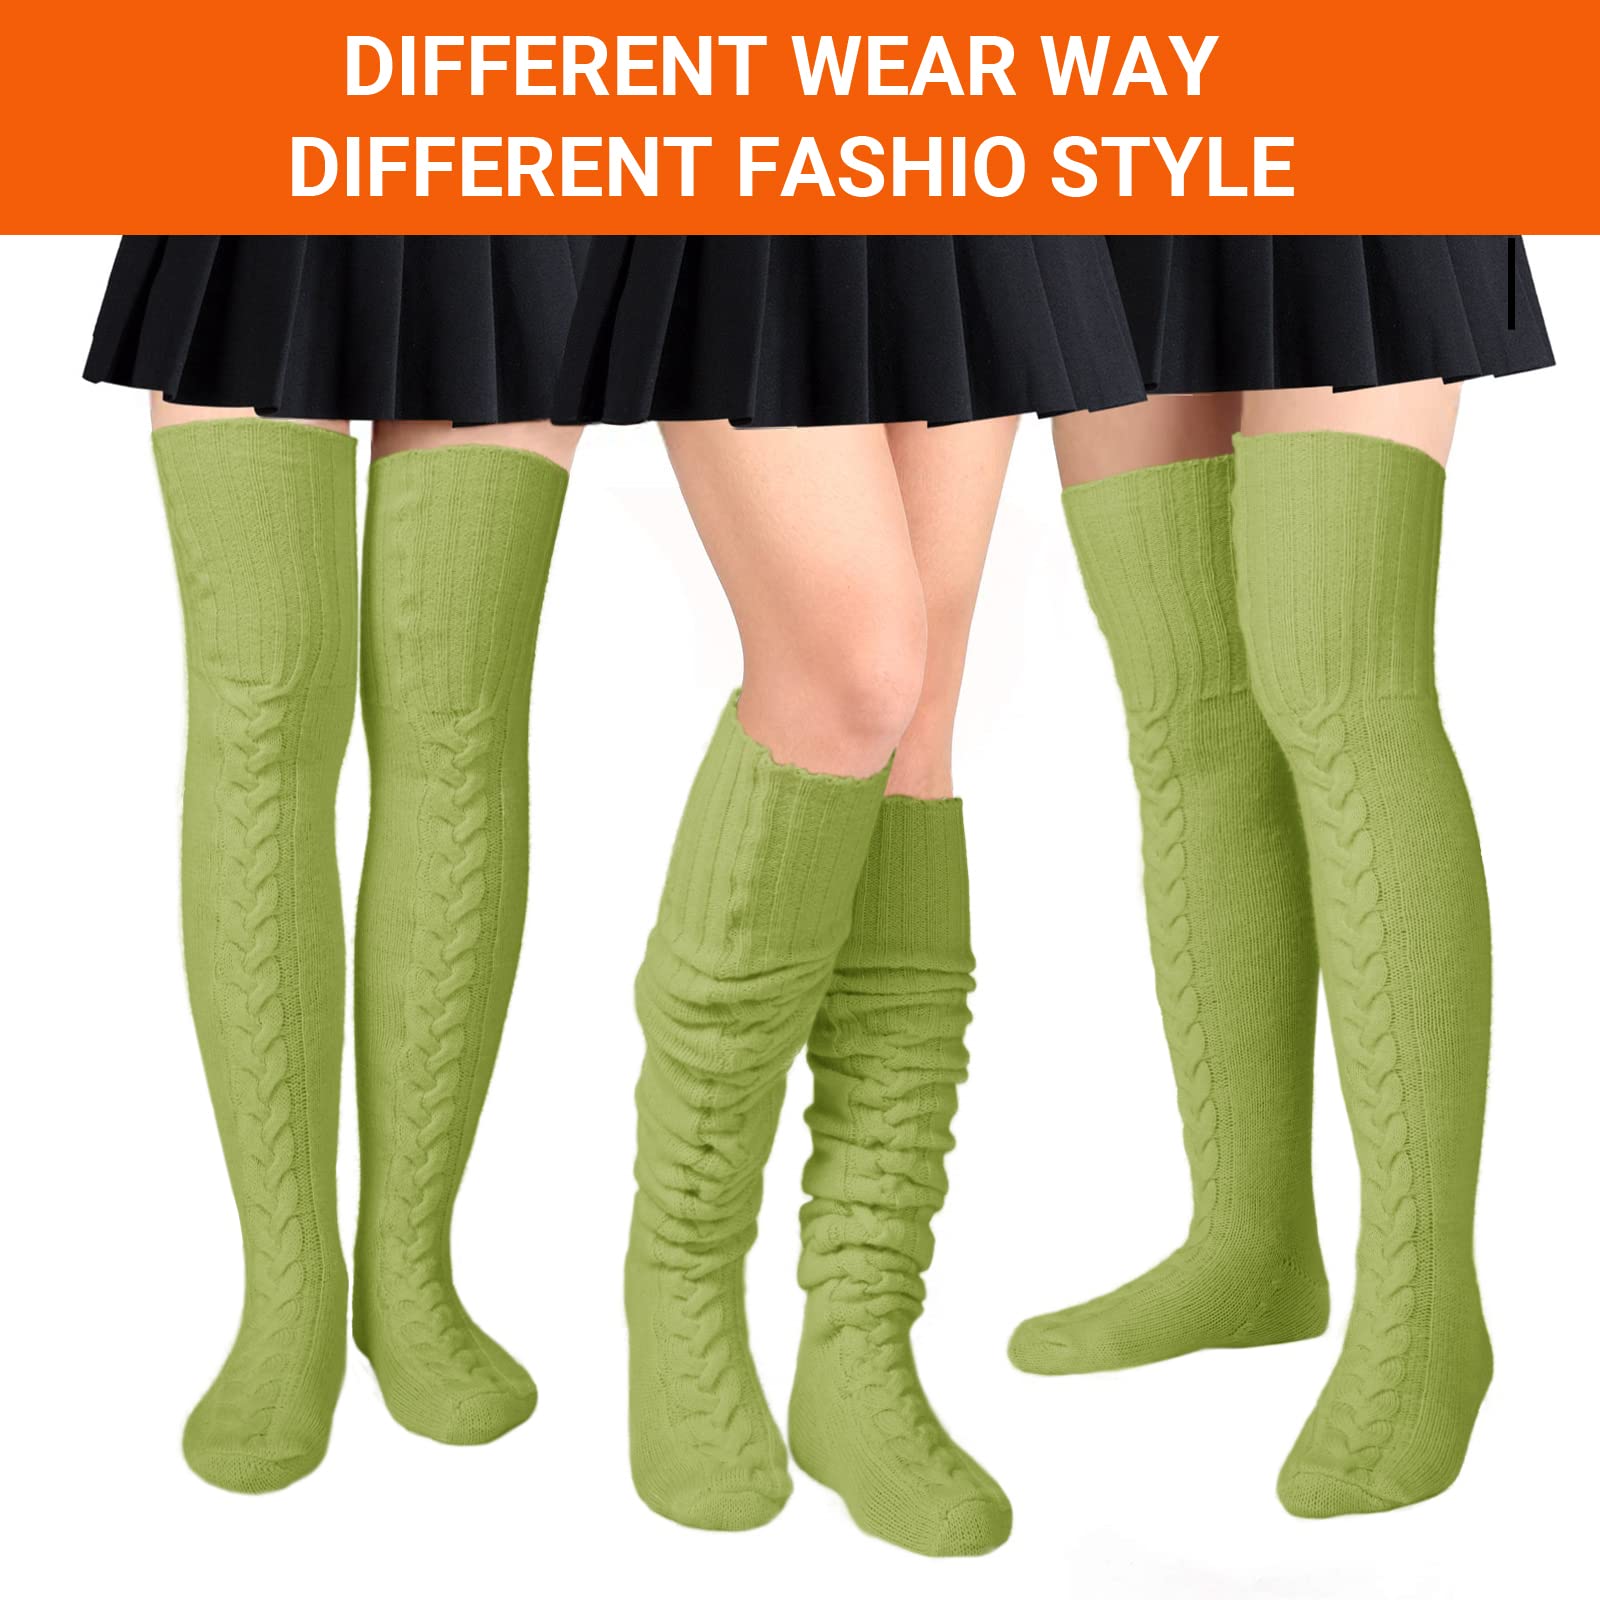 Wool Thigh High Socks Over the Knee Socks - Avocado Green - Moon Wood